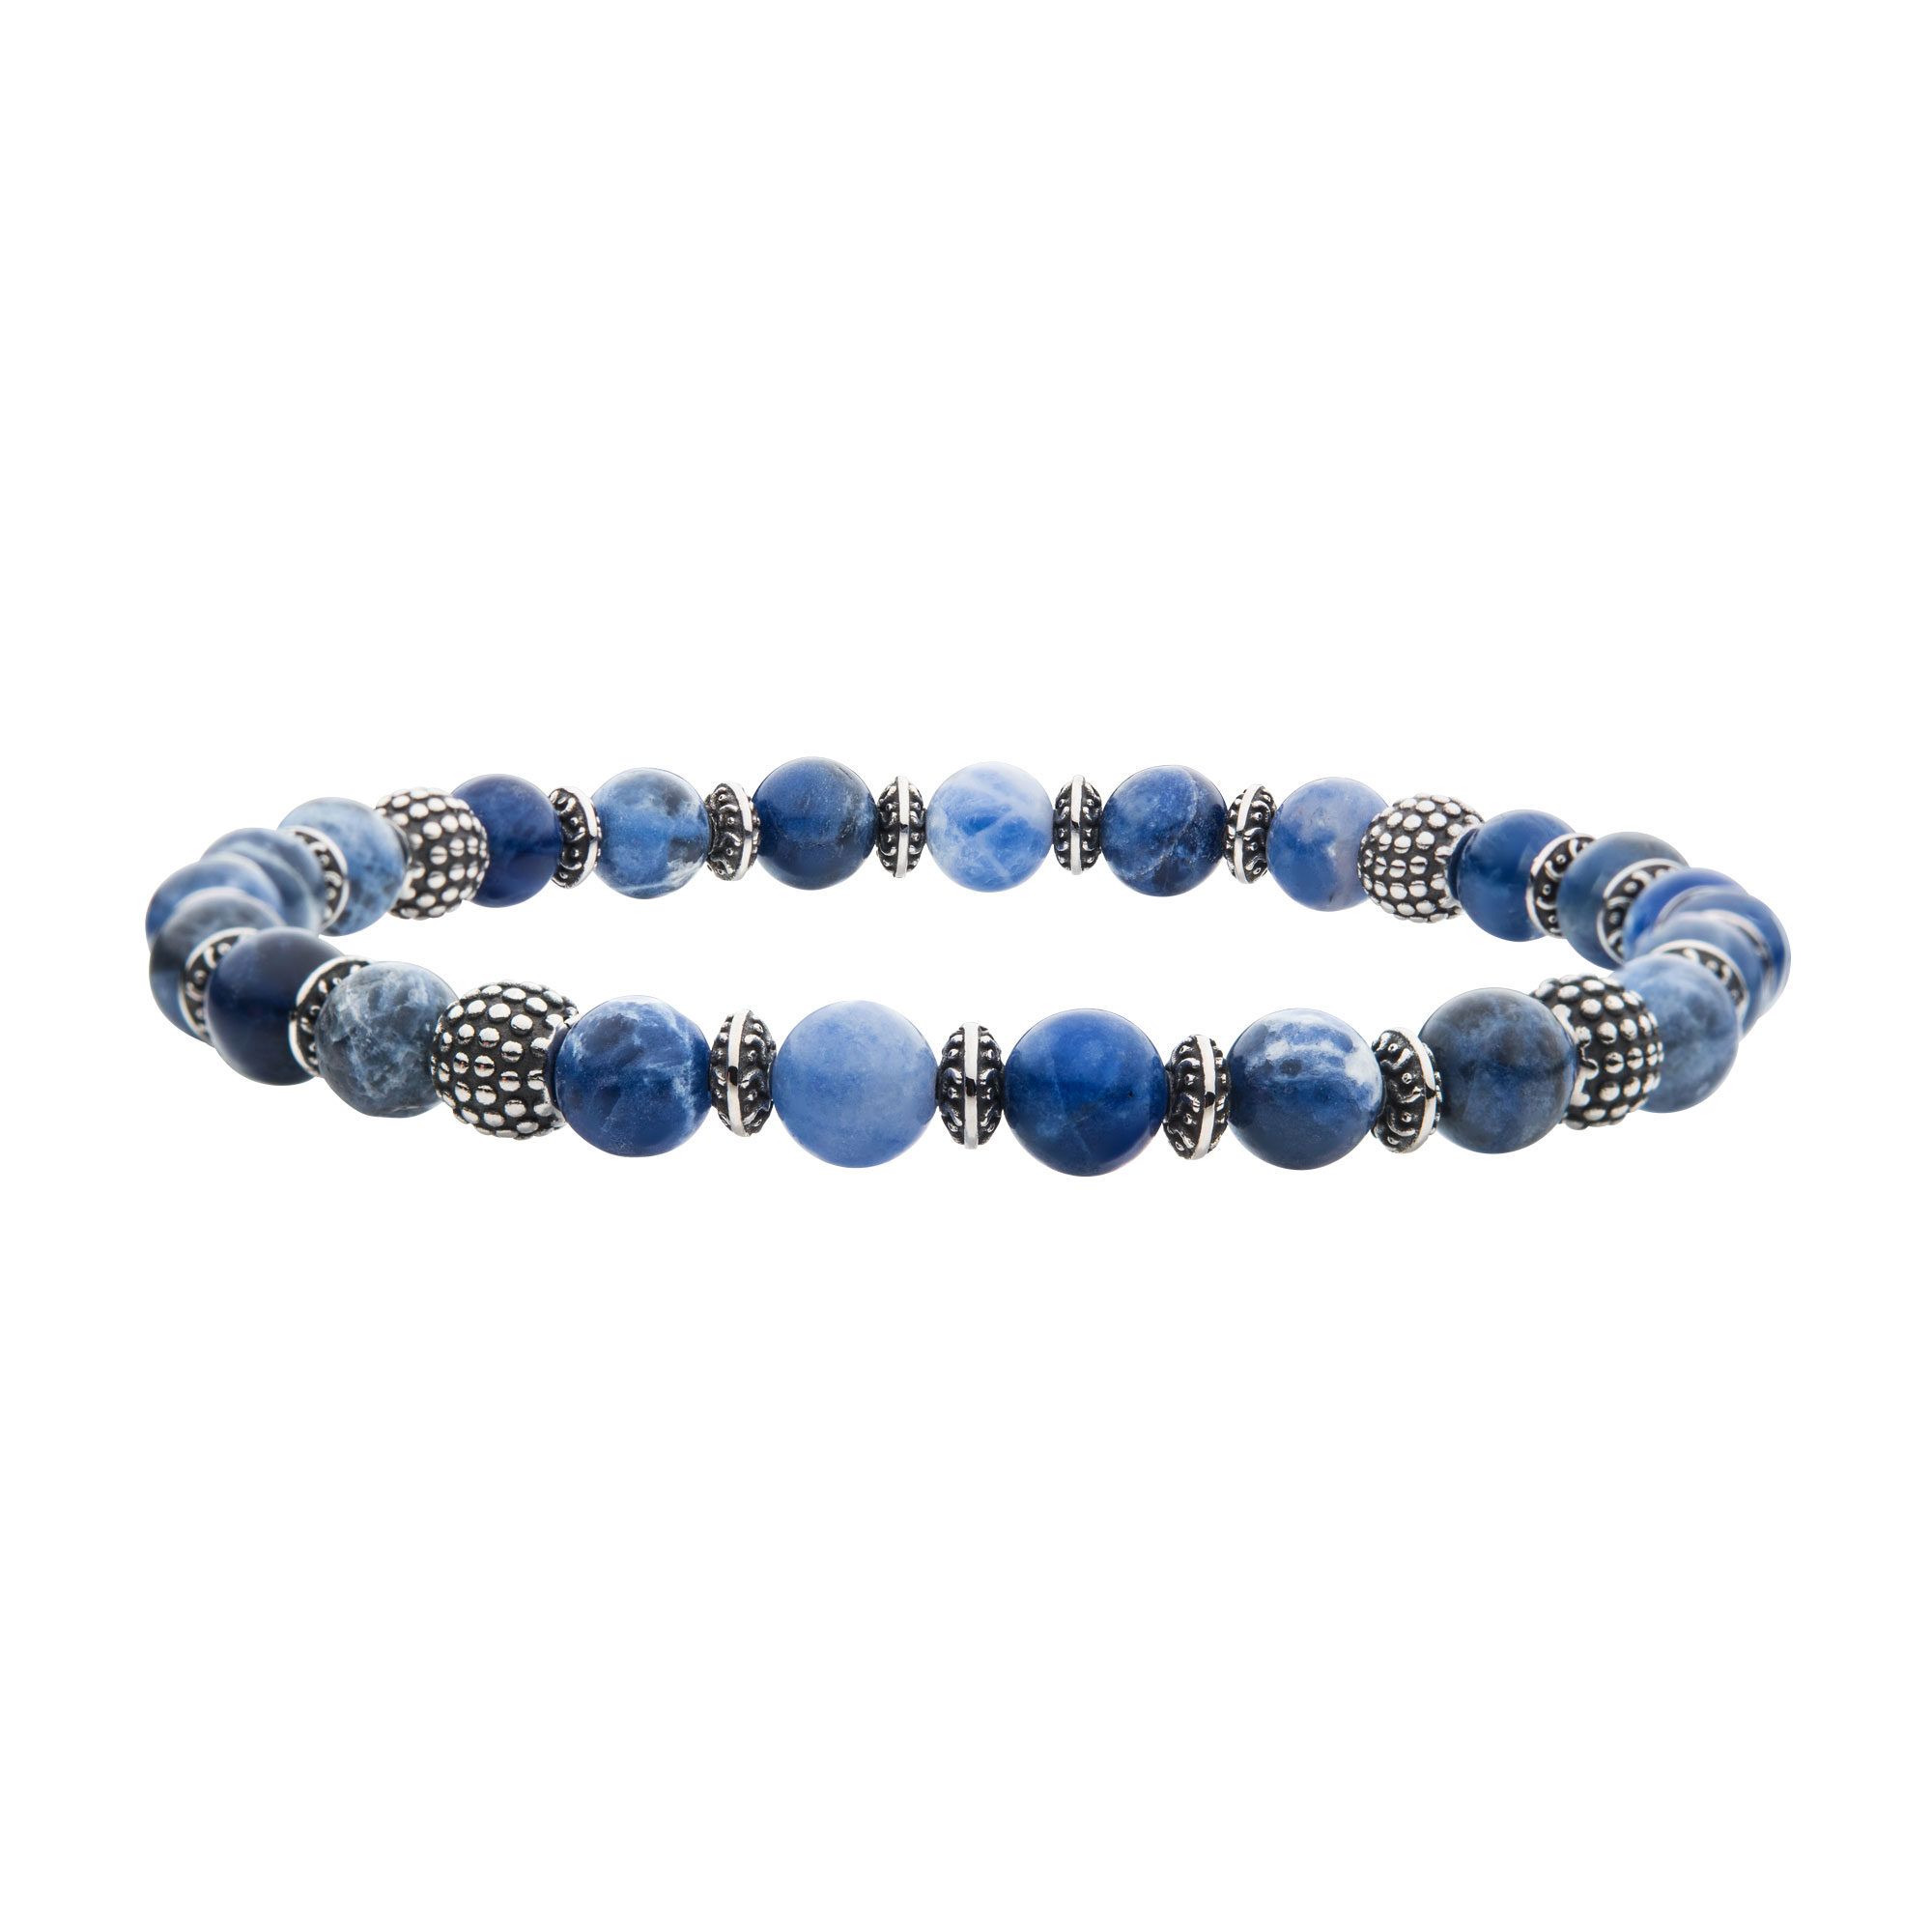 Blue Sodalite Stones with Black Oxidized Beads Bracelet Enchanted Jewelry Plainfield, CT